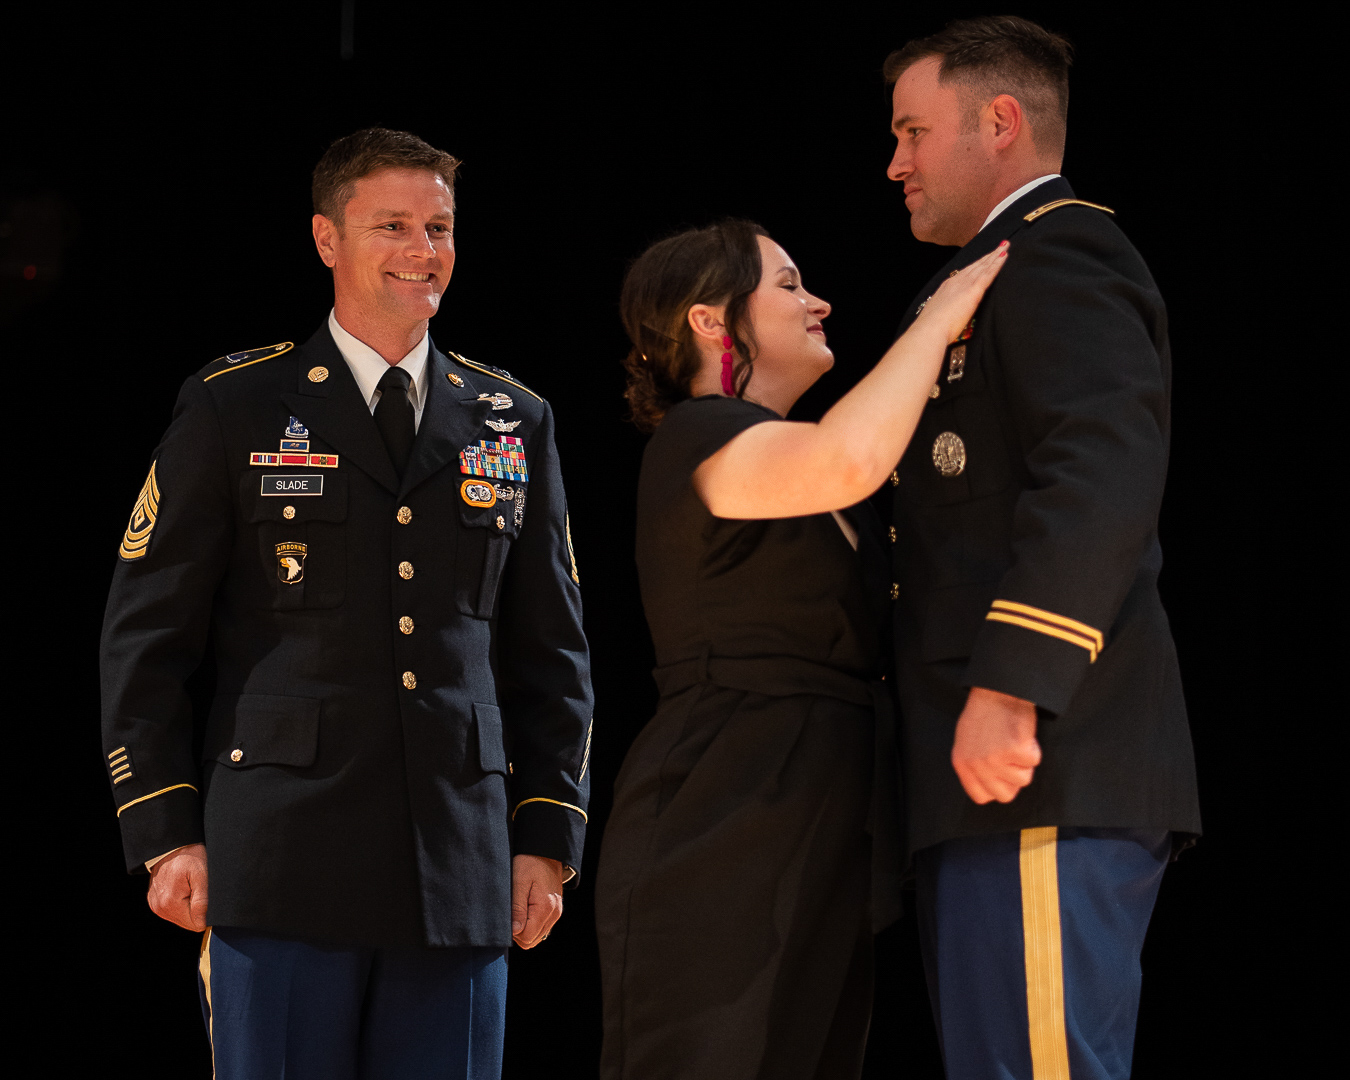 PHOTOS: ROTC celebrates this year's graduates during commissioning ceremony